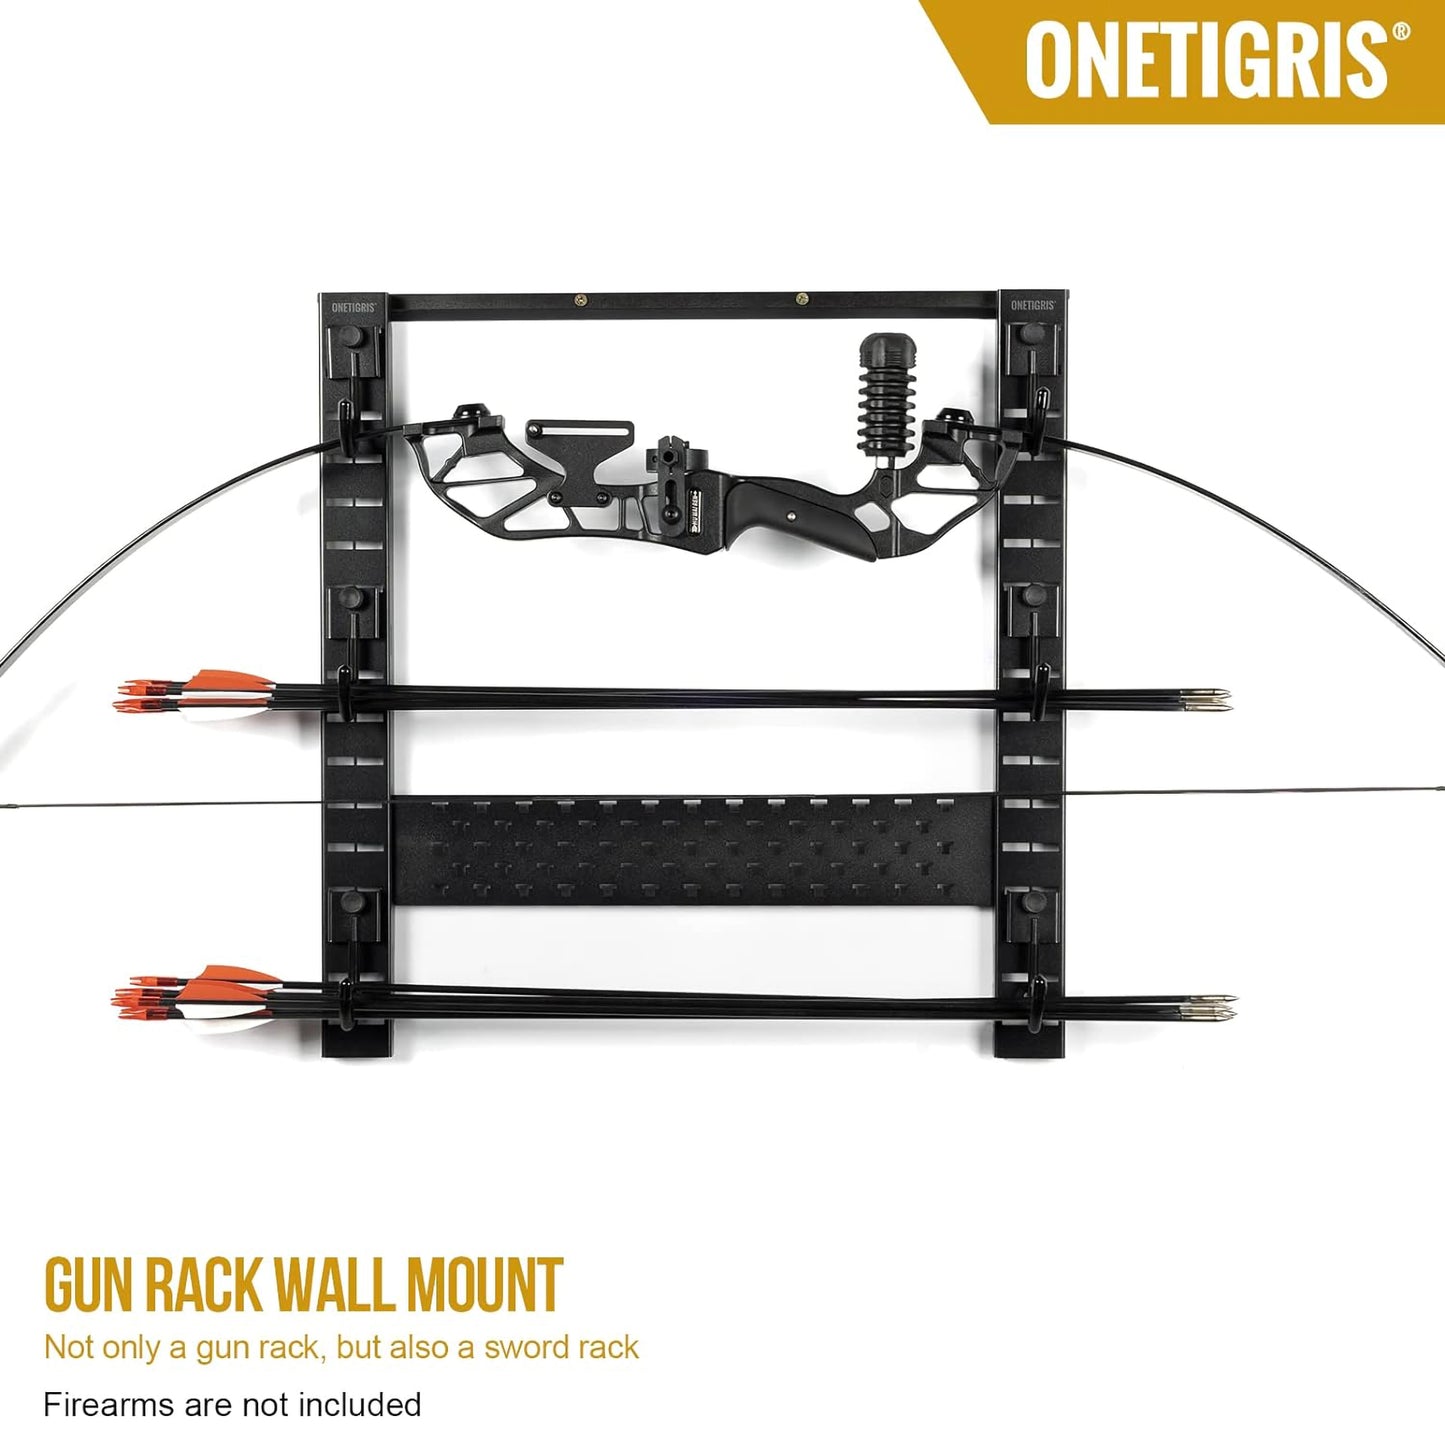 Gun Rack Wall Mount 02 (Only US)